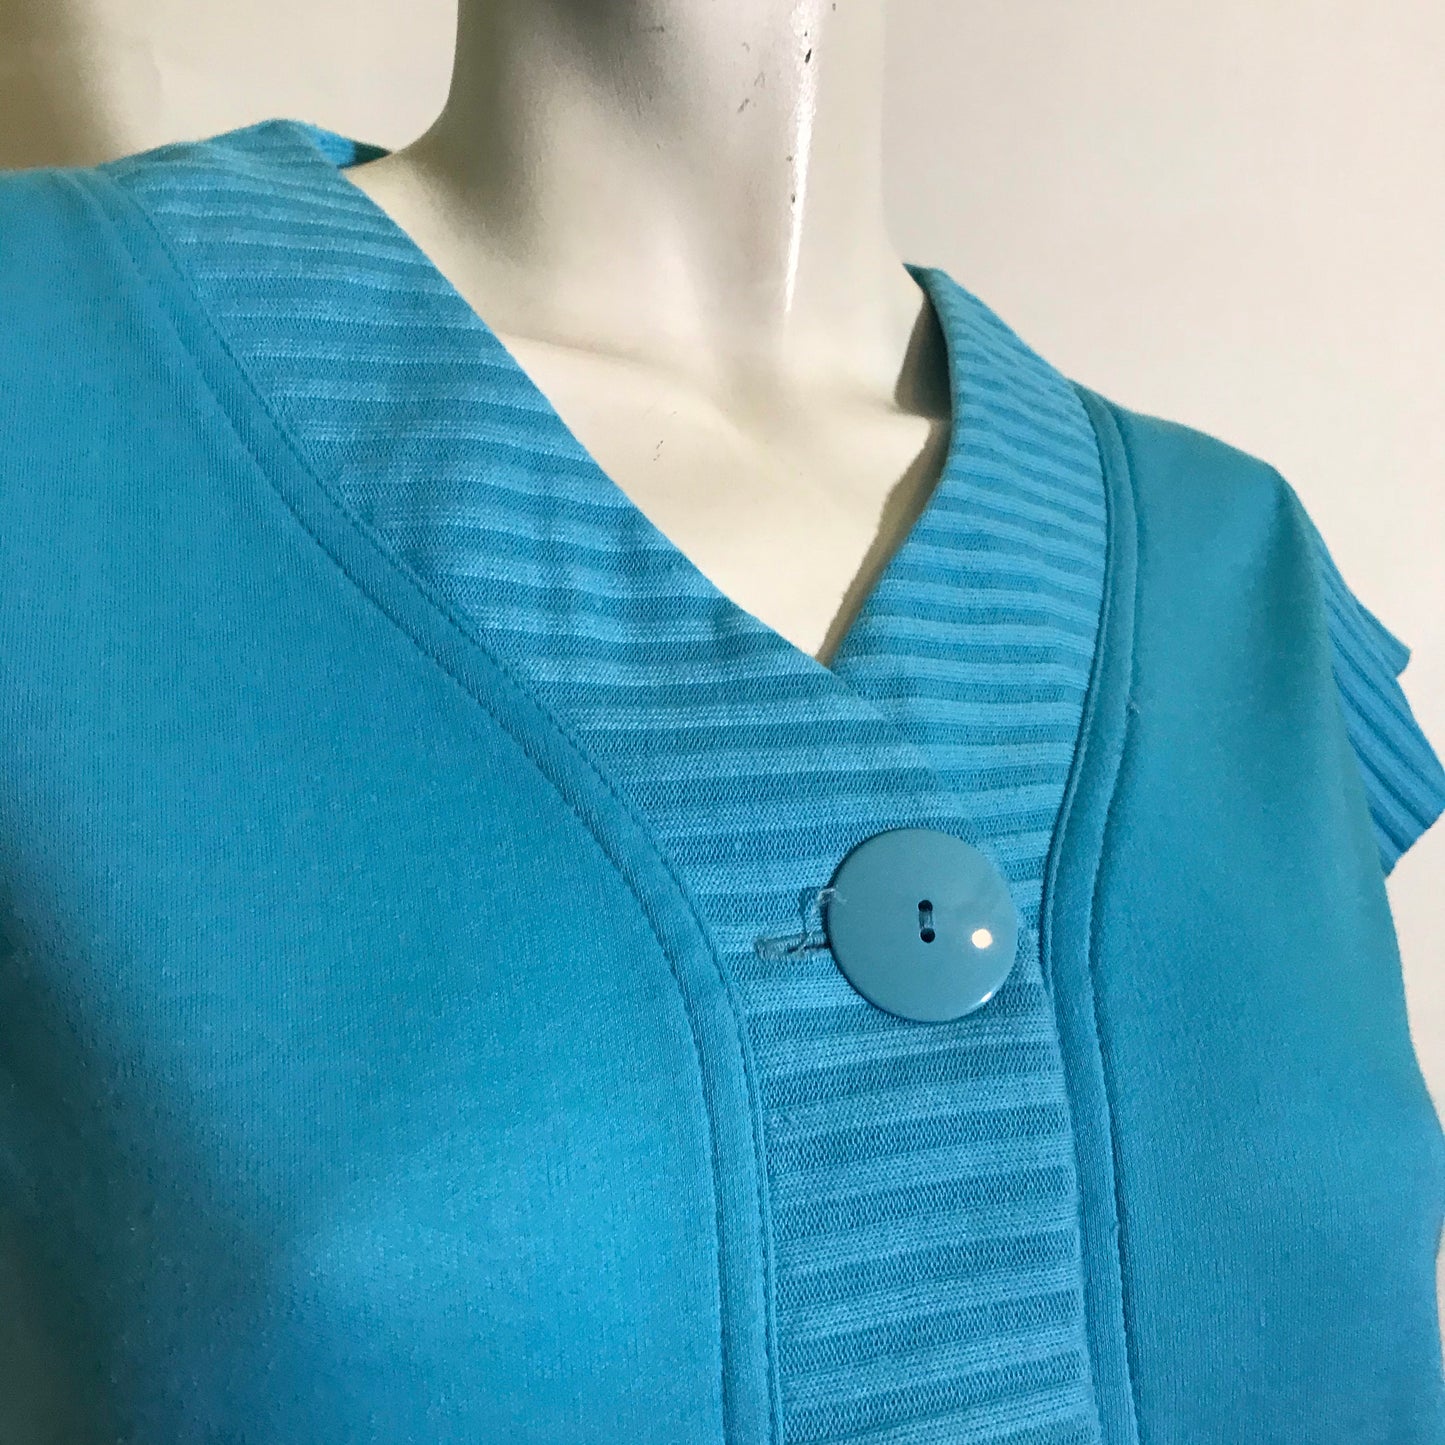 Big Button Front Turquoise Cotton Knit Shirt circa 1980s